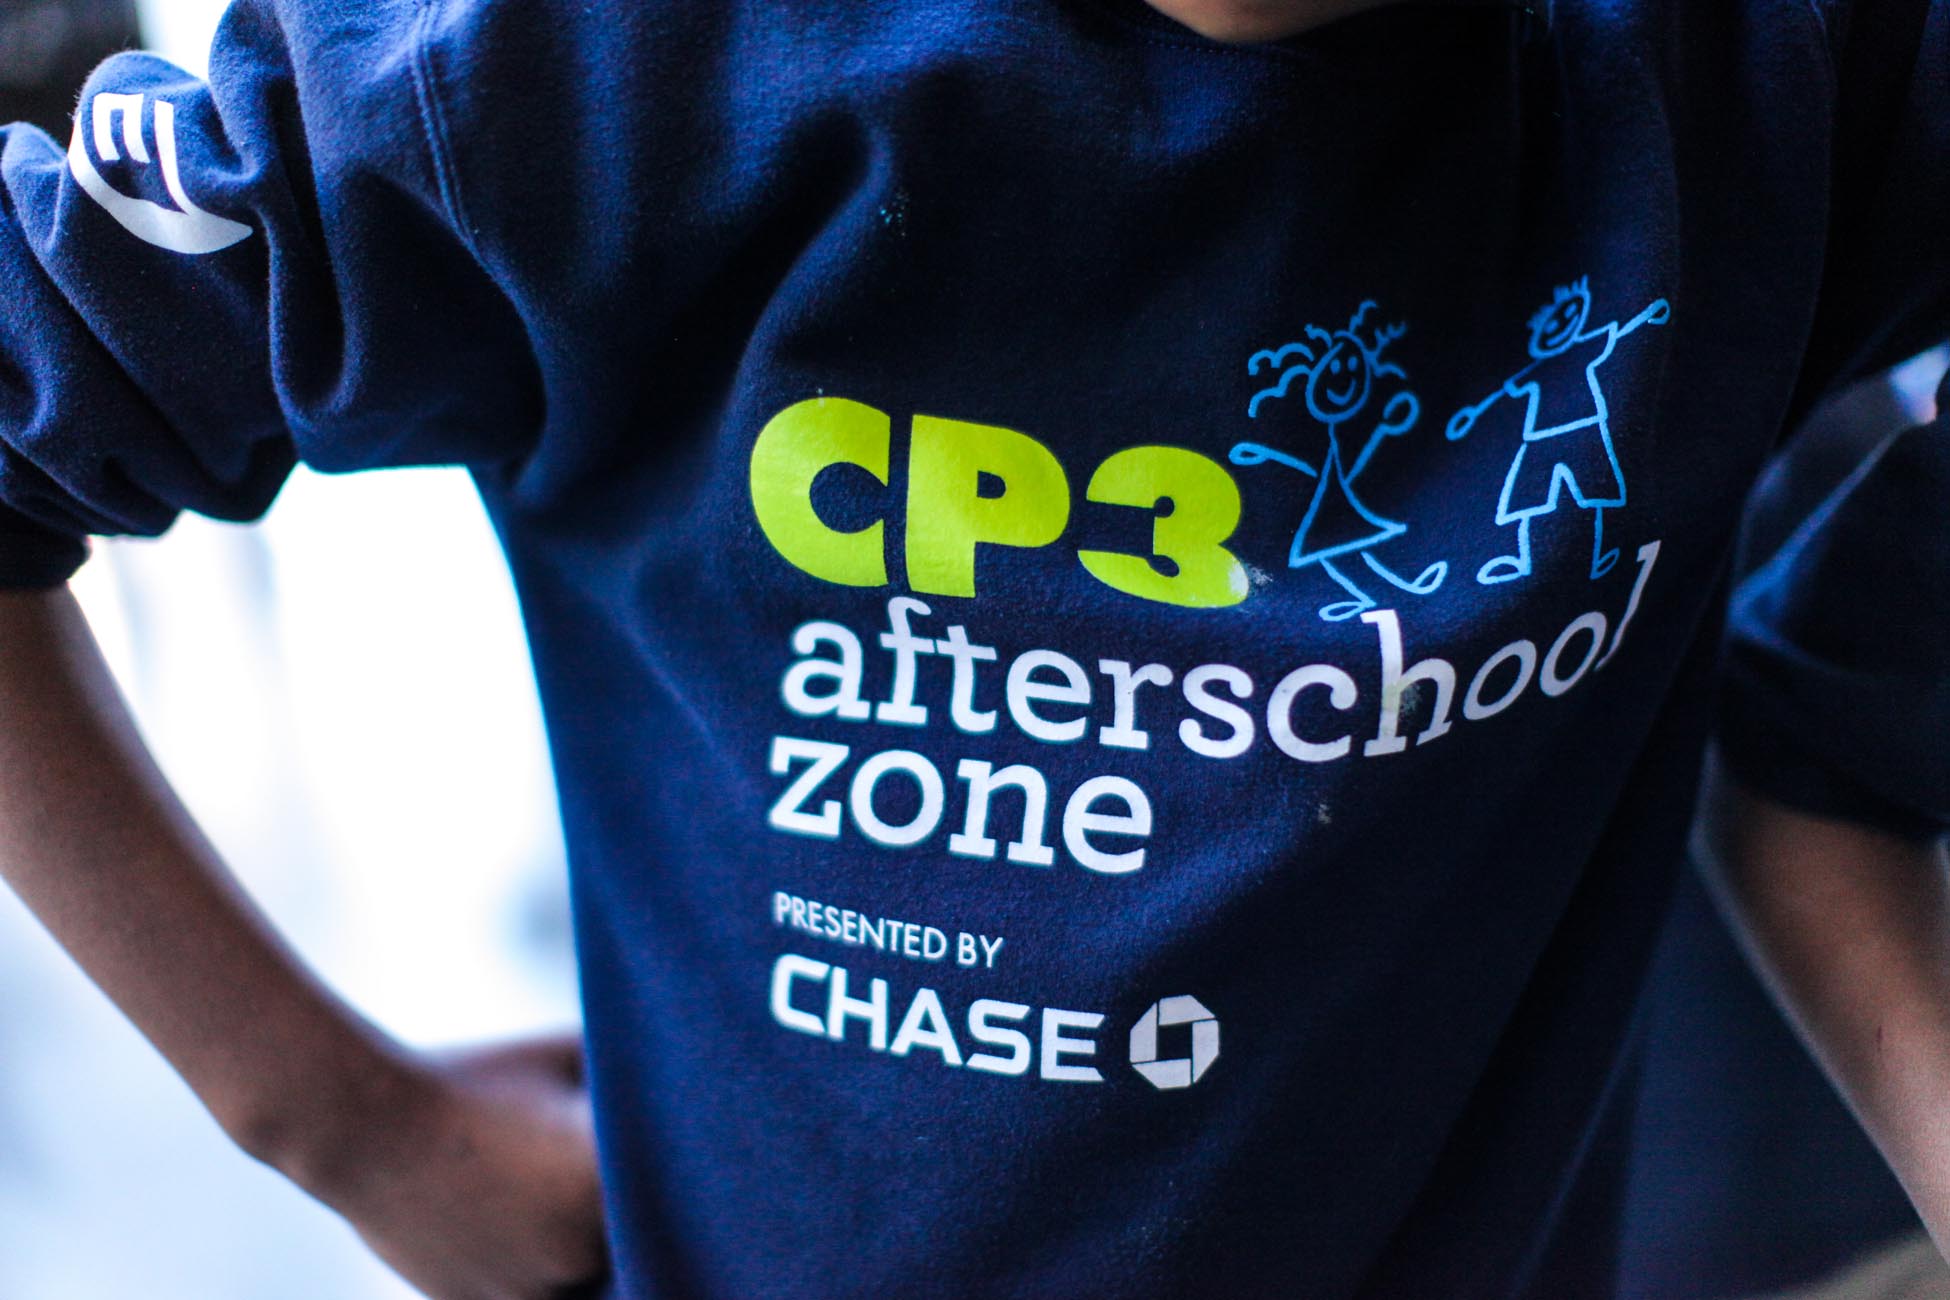 CP3 Afterschool Zone